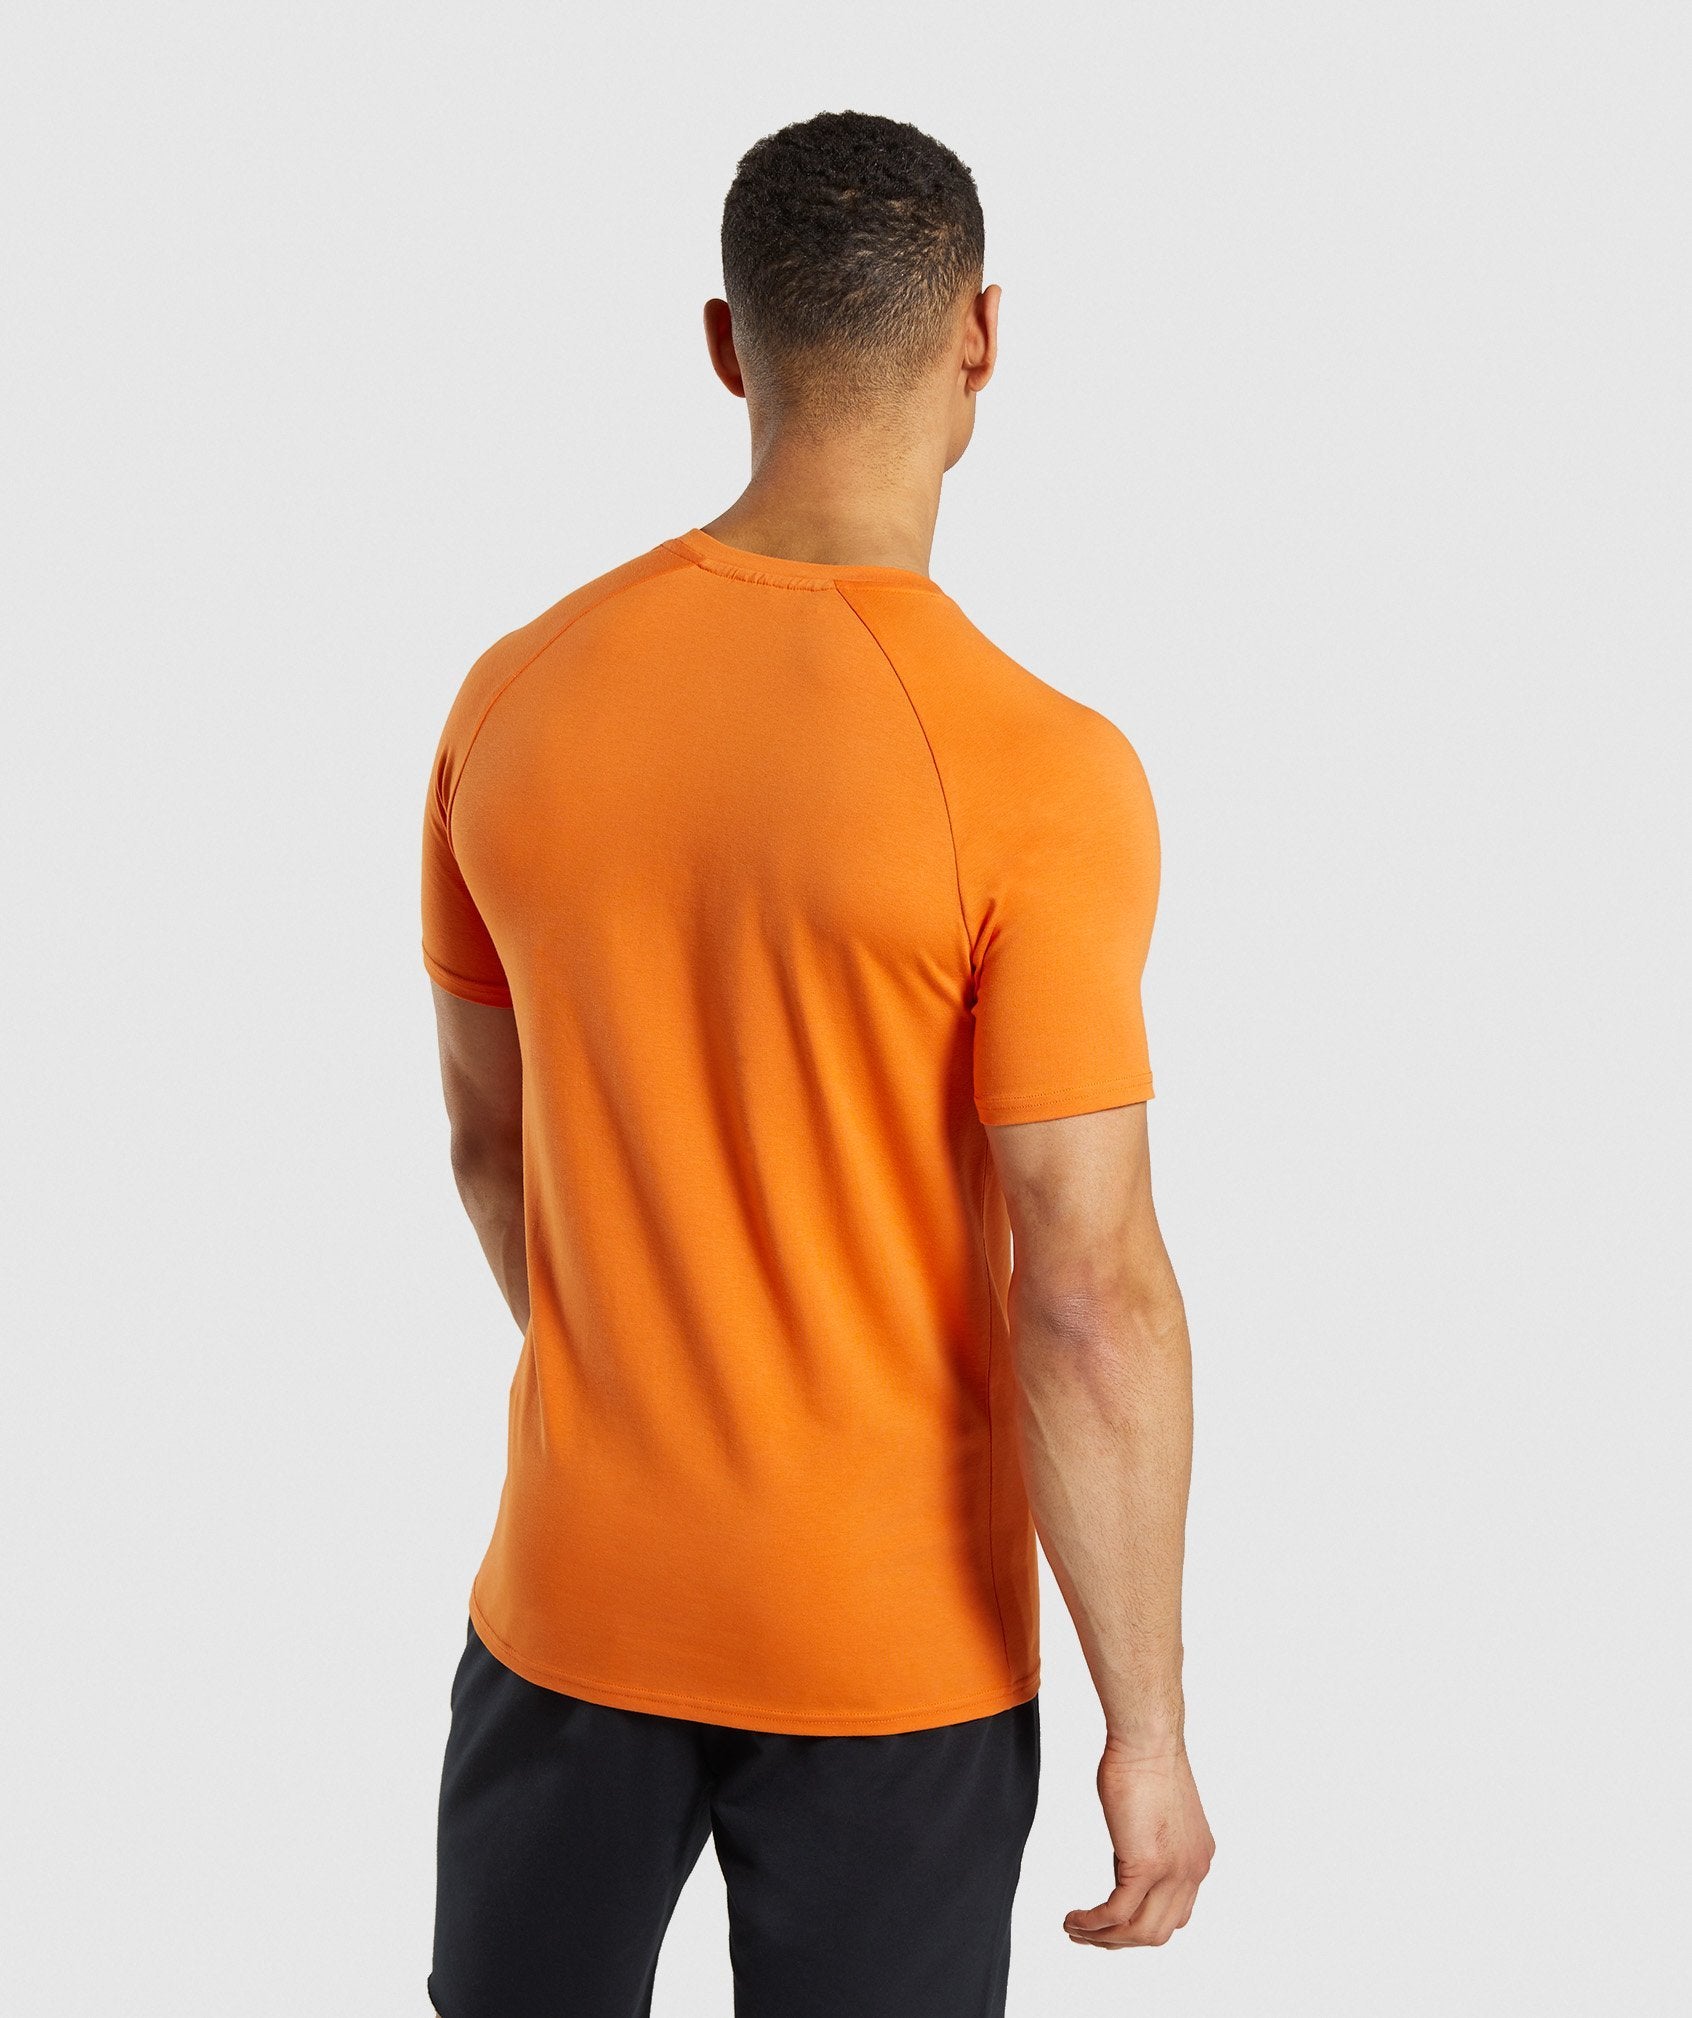 Apollo T-Shirt in Orange - view 2